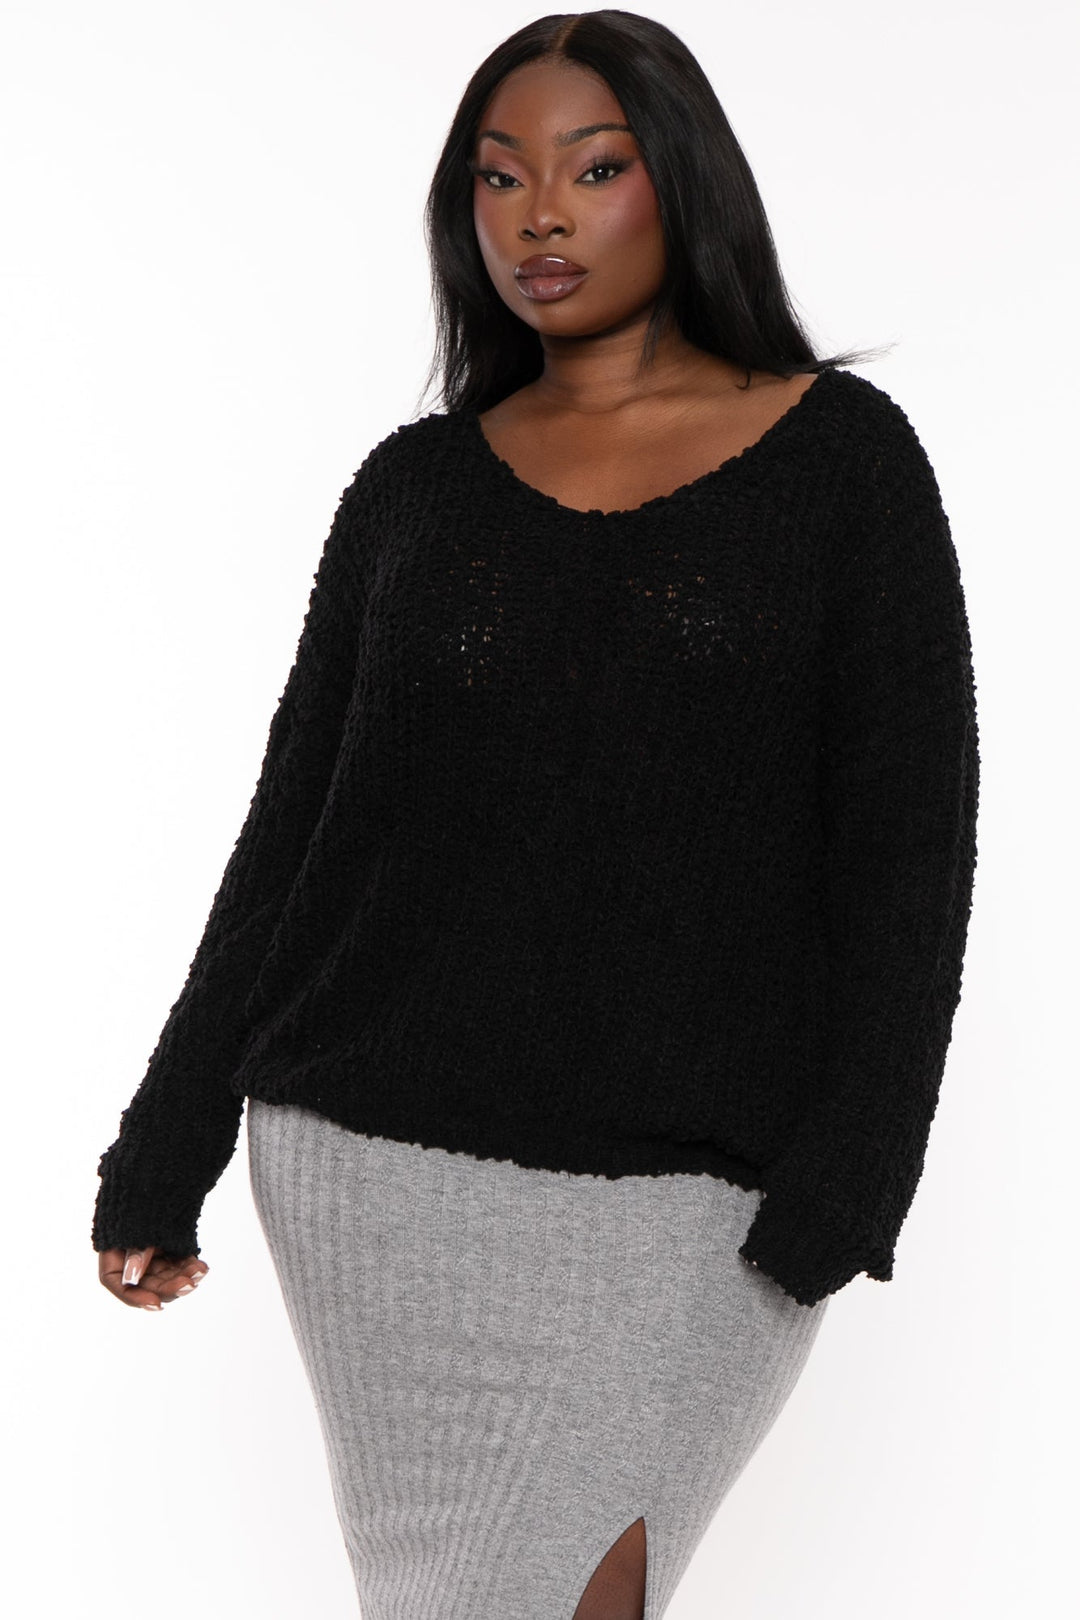 Sweet Generis Sweaters & Cardigans 1X / Black a Plus Size Ribbed Popcorn Knit Sweater - Black